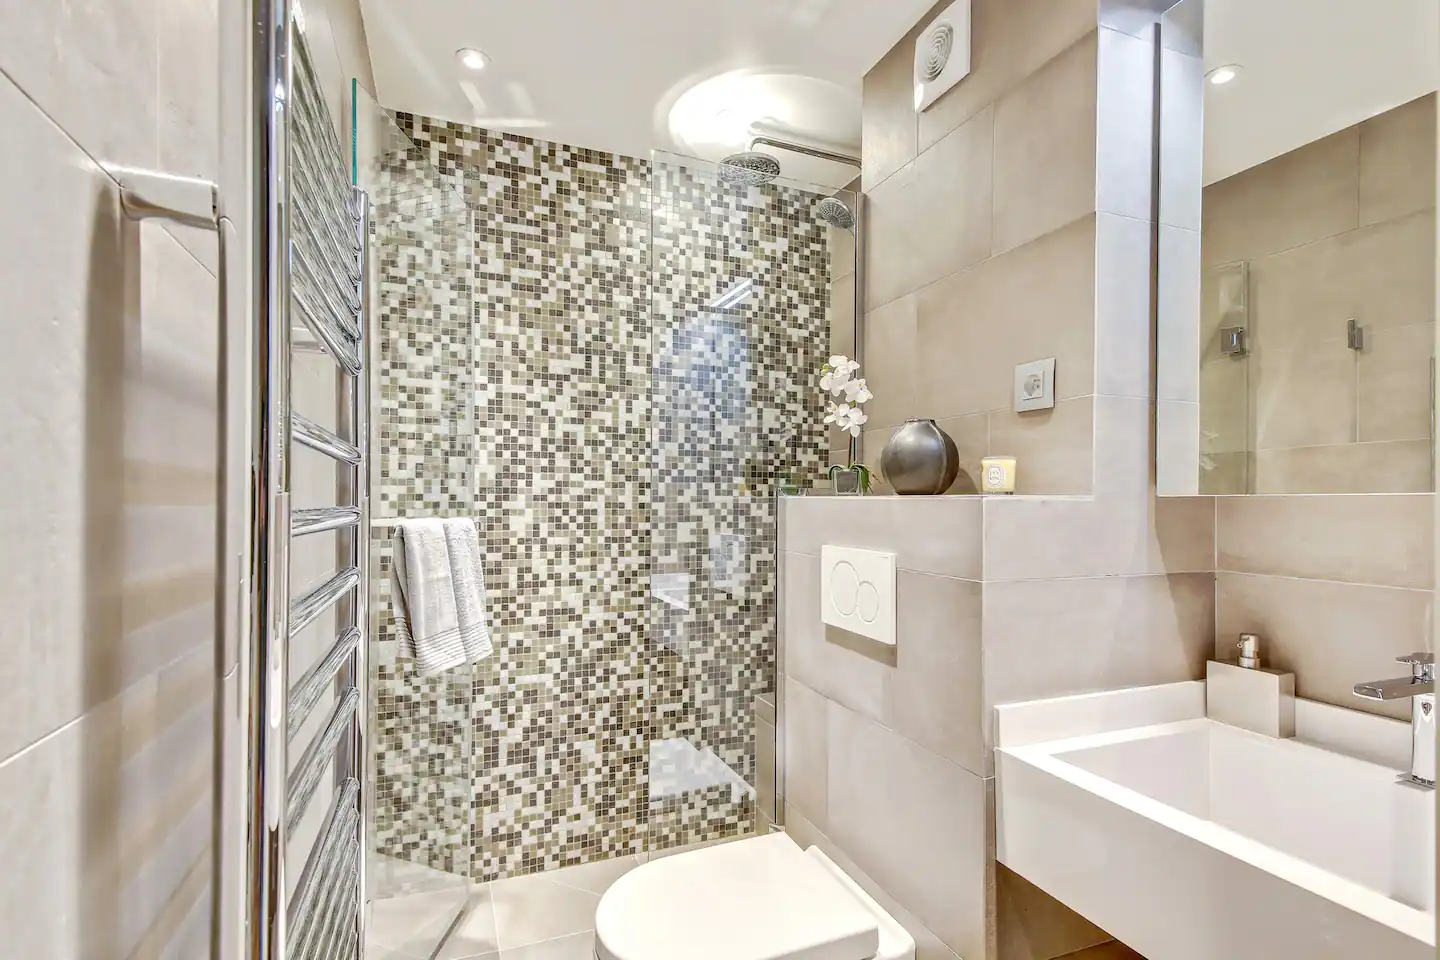 Bathroom features: sink, shower, toilet, shelves, tiled floor.